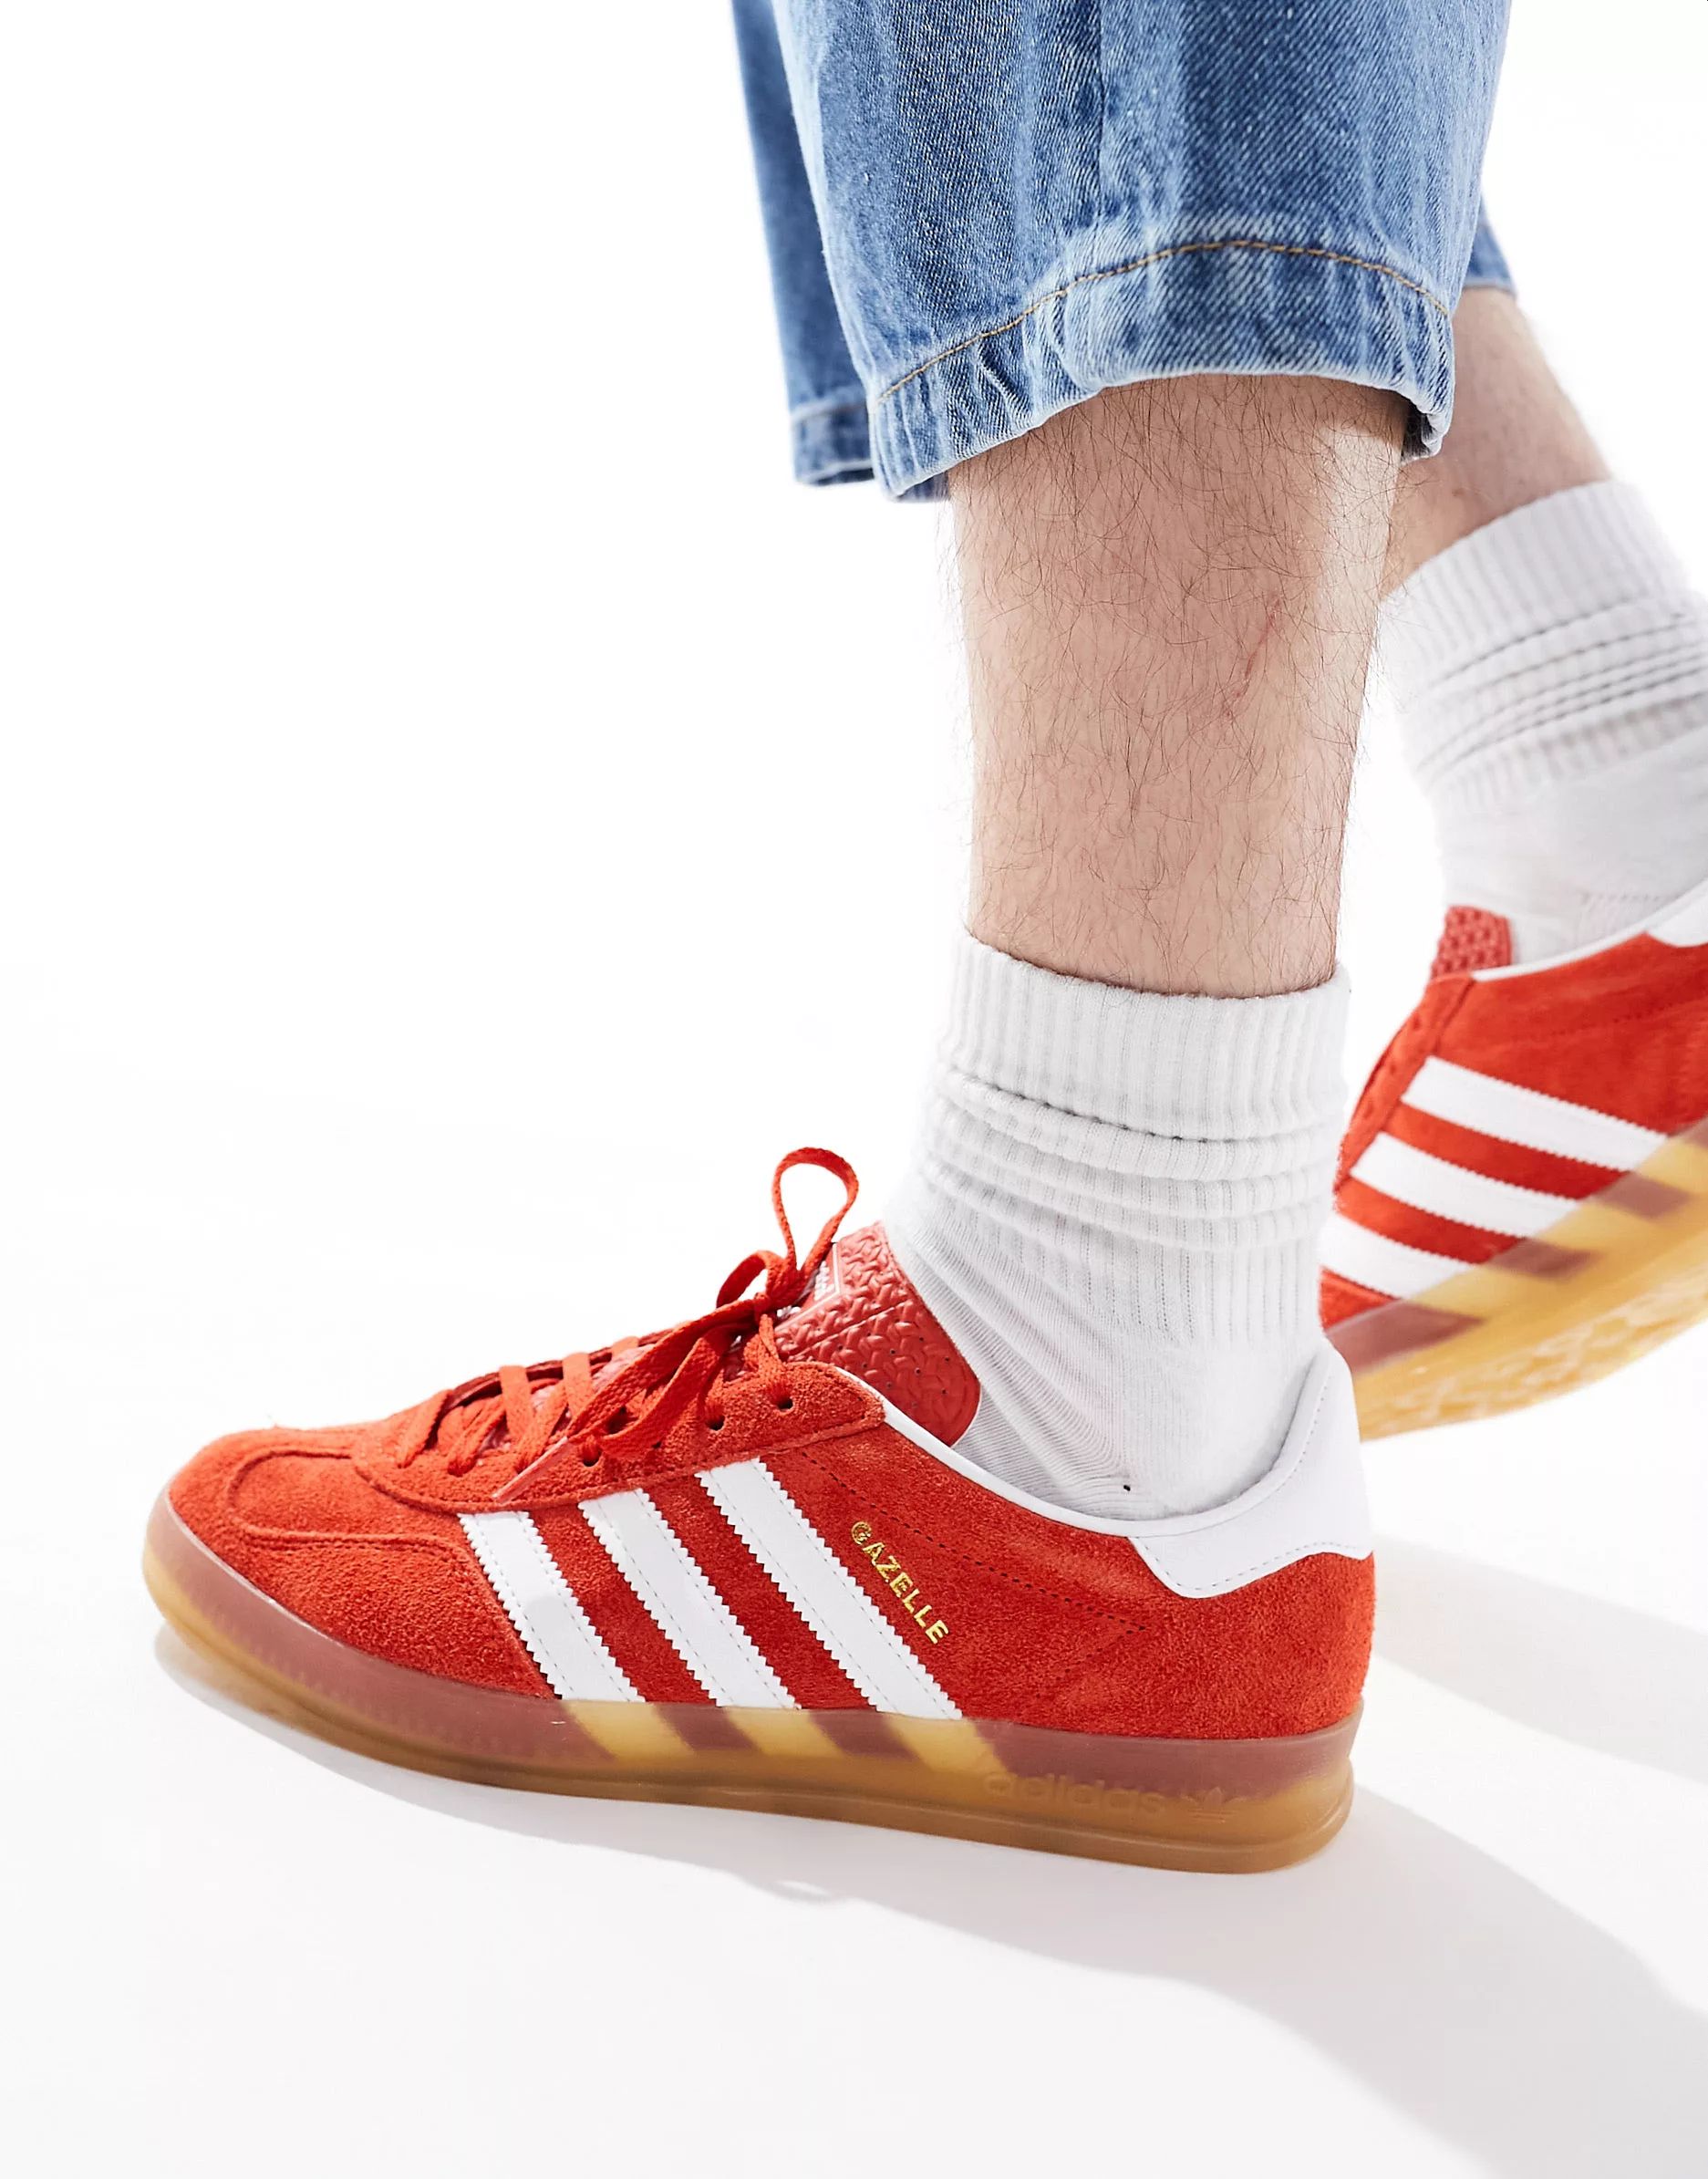 adidas Originals Gazelle Indoor trainers in red with gum sole | ASOS (Global)